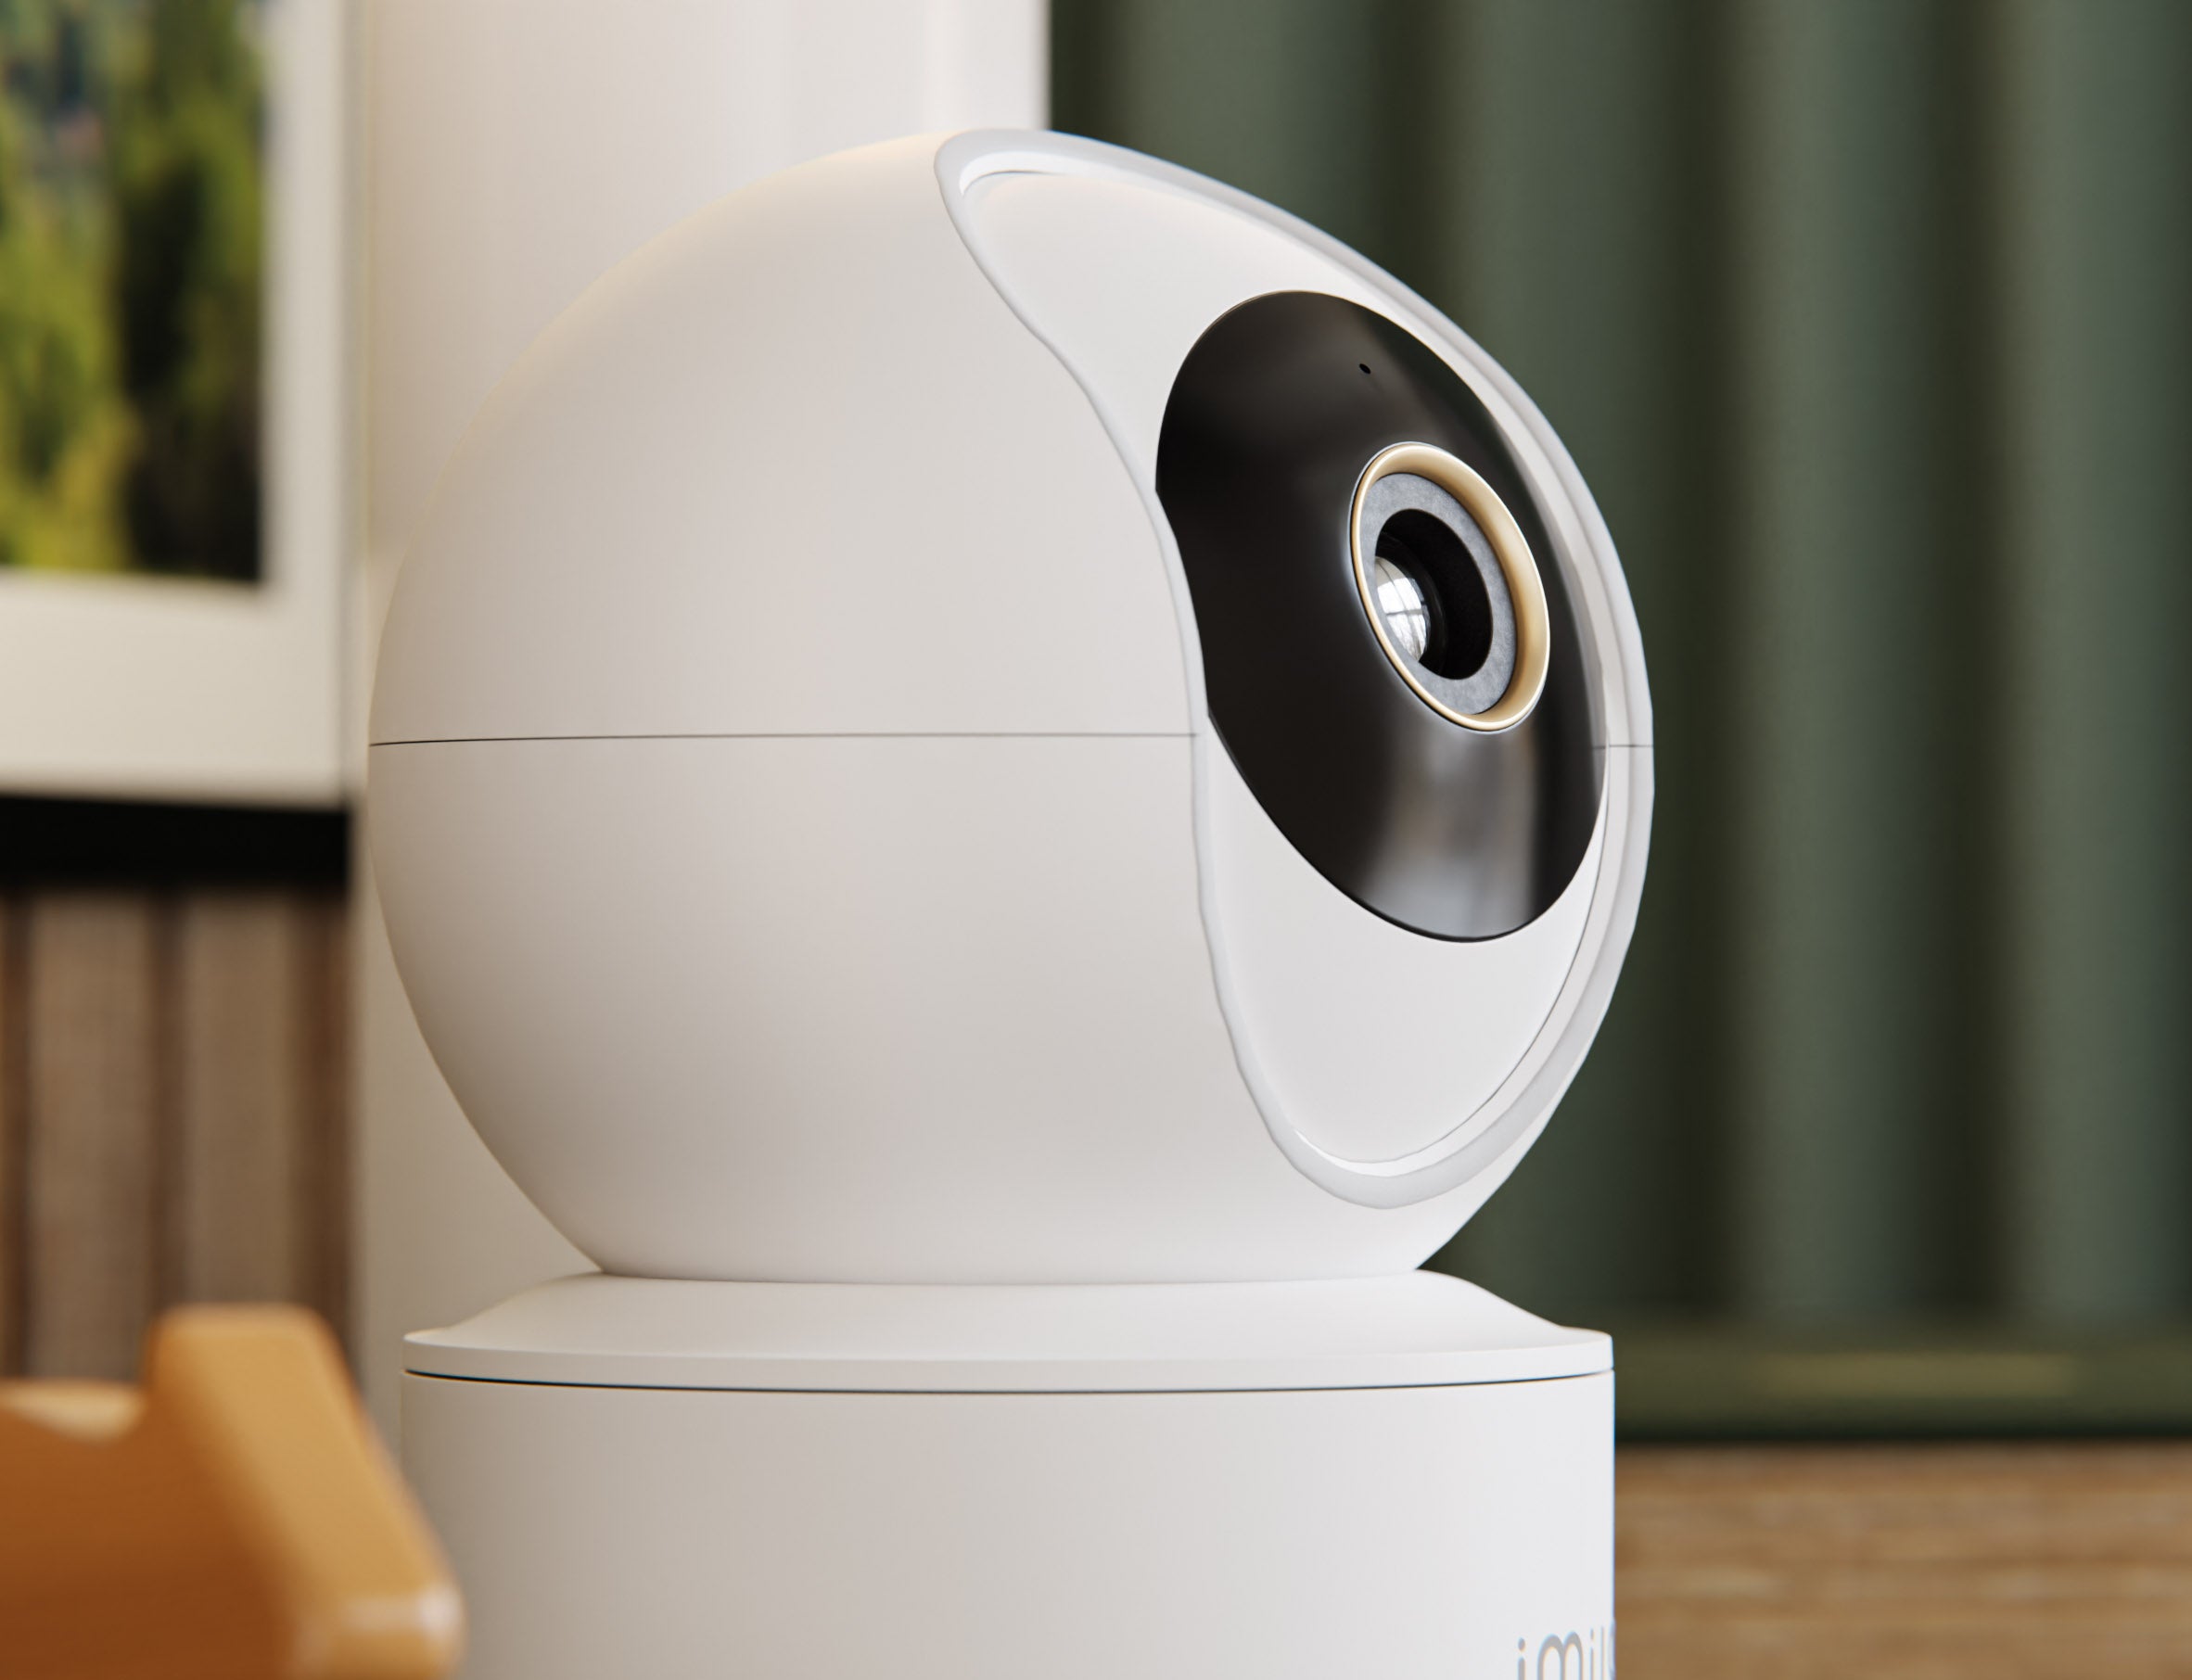 C21-indoor-security-monitoring-baby-camera-closeup-view-of-lens